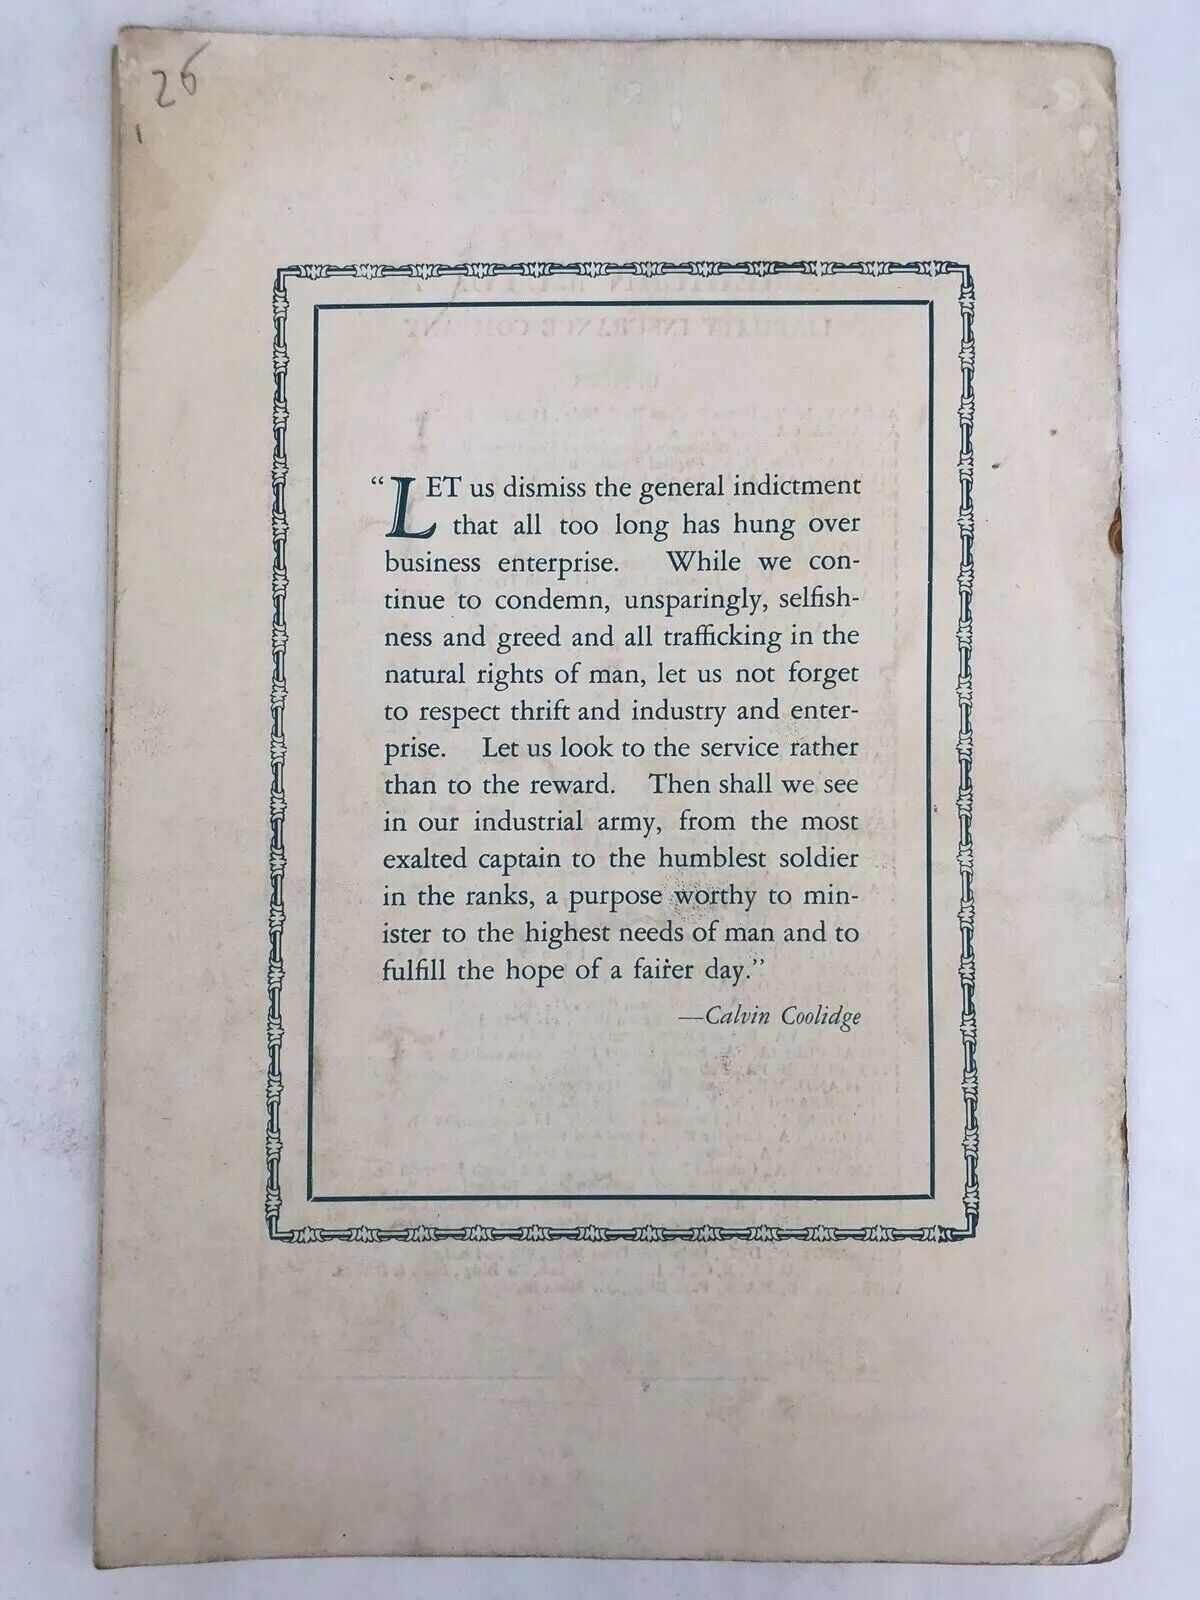 Antique AMERICAN MUTUAL MAGAZINE March 1930 Insurance Company History ART DECO